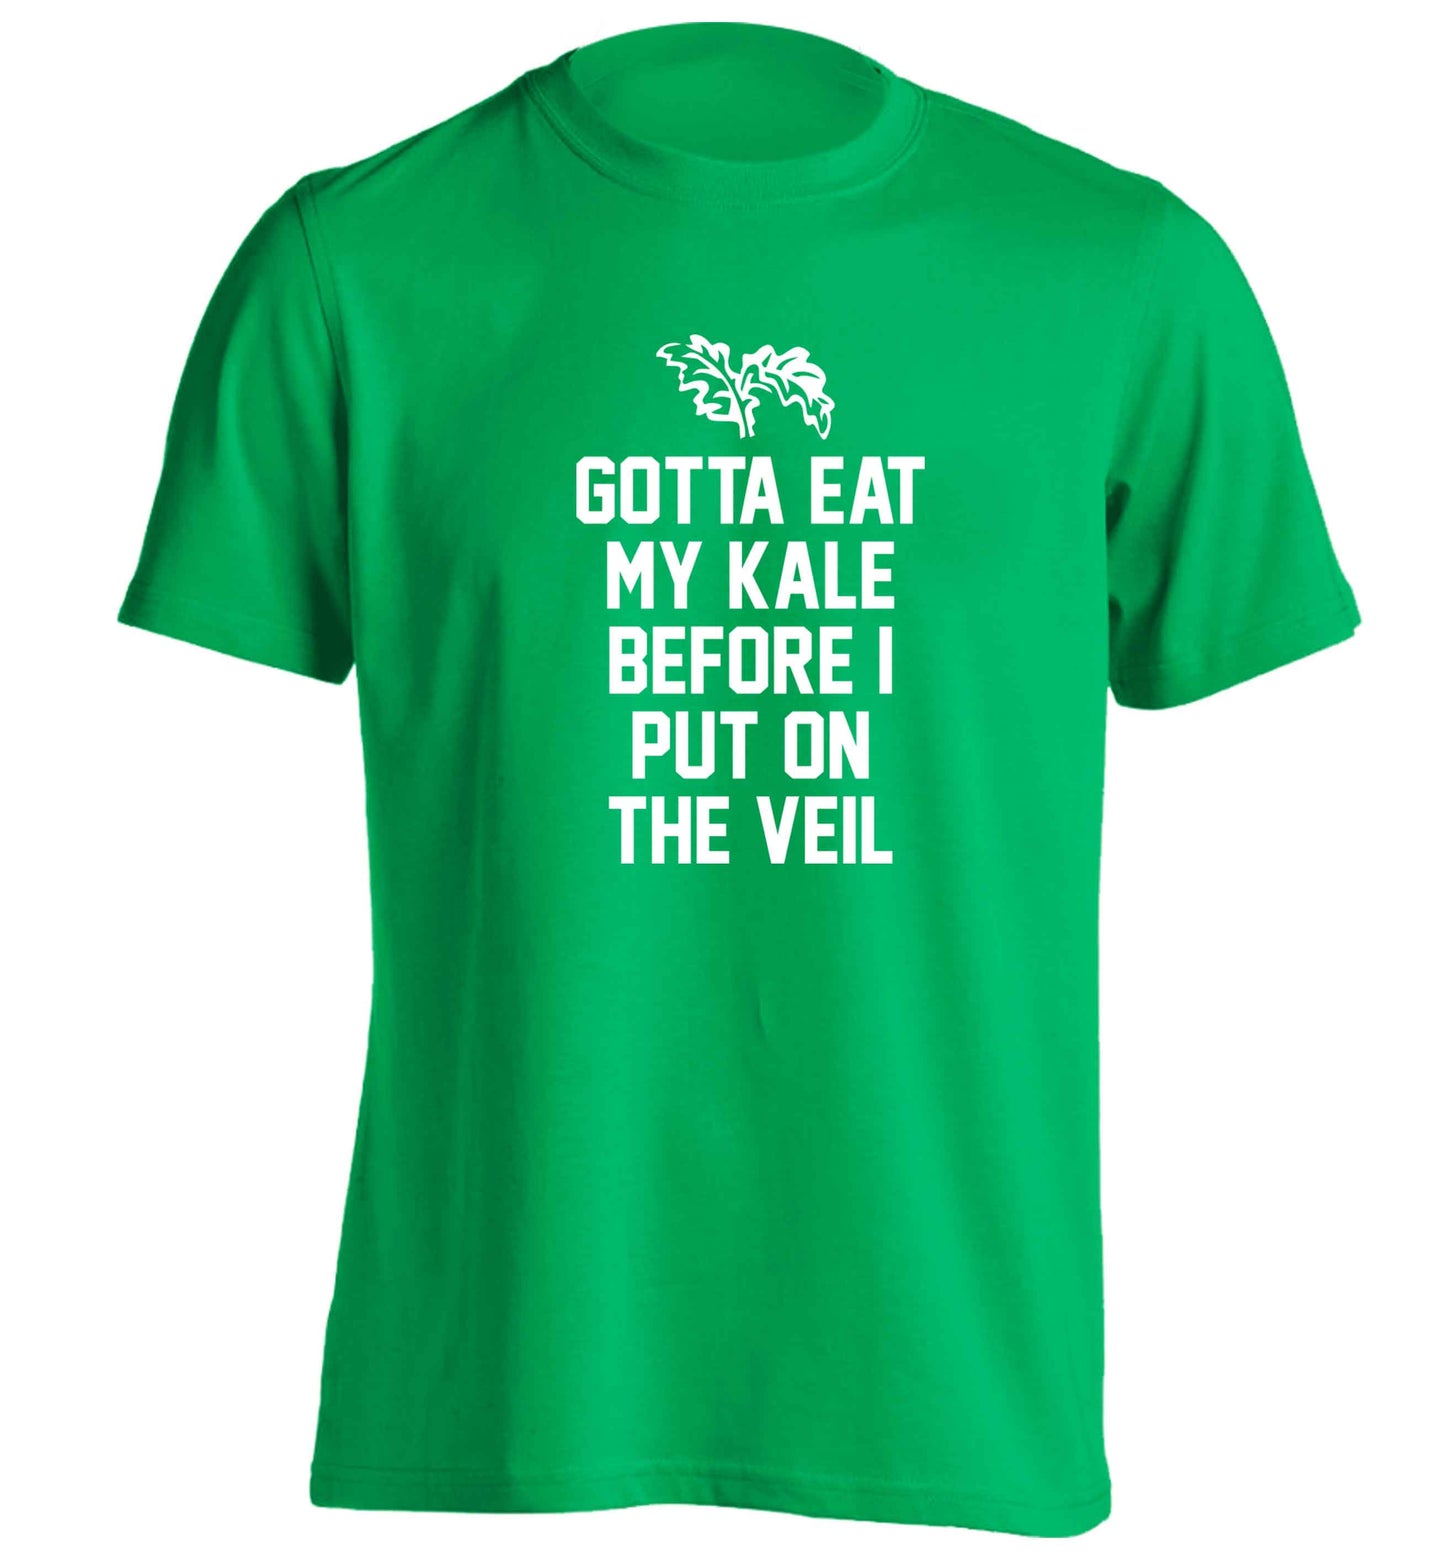 Gotta eat my kale before I put on the veil adults unisex green Tshirt 2XL